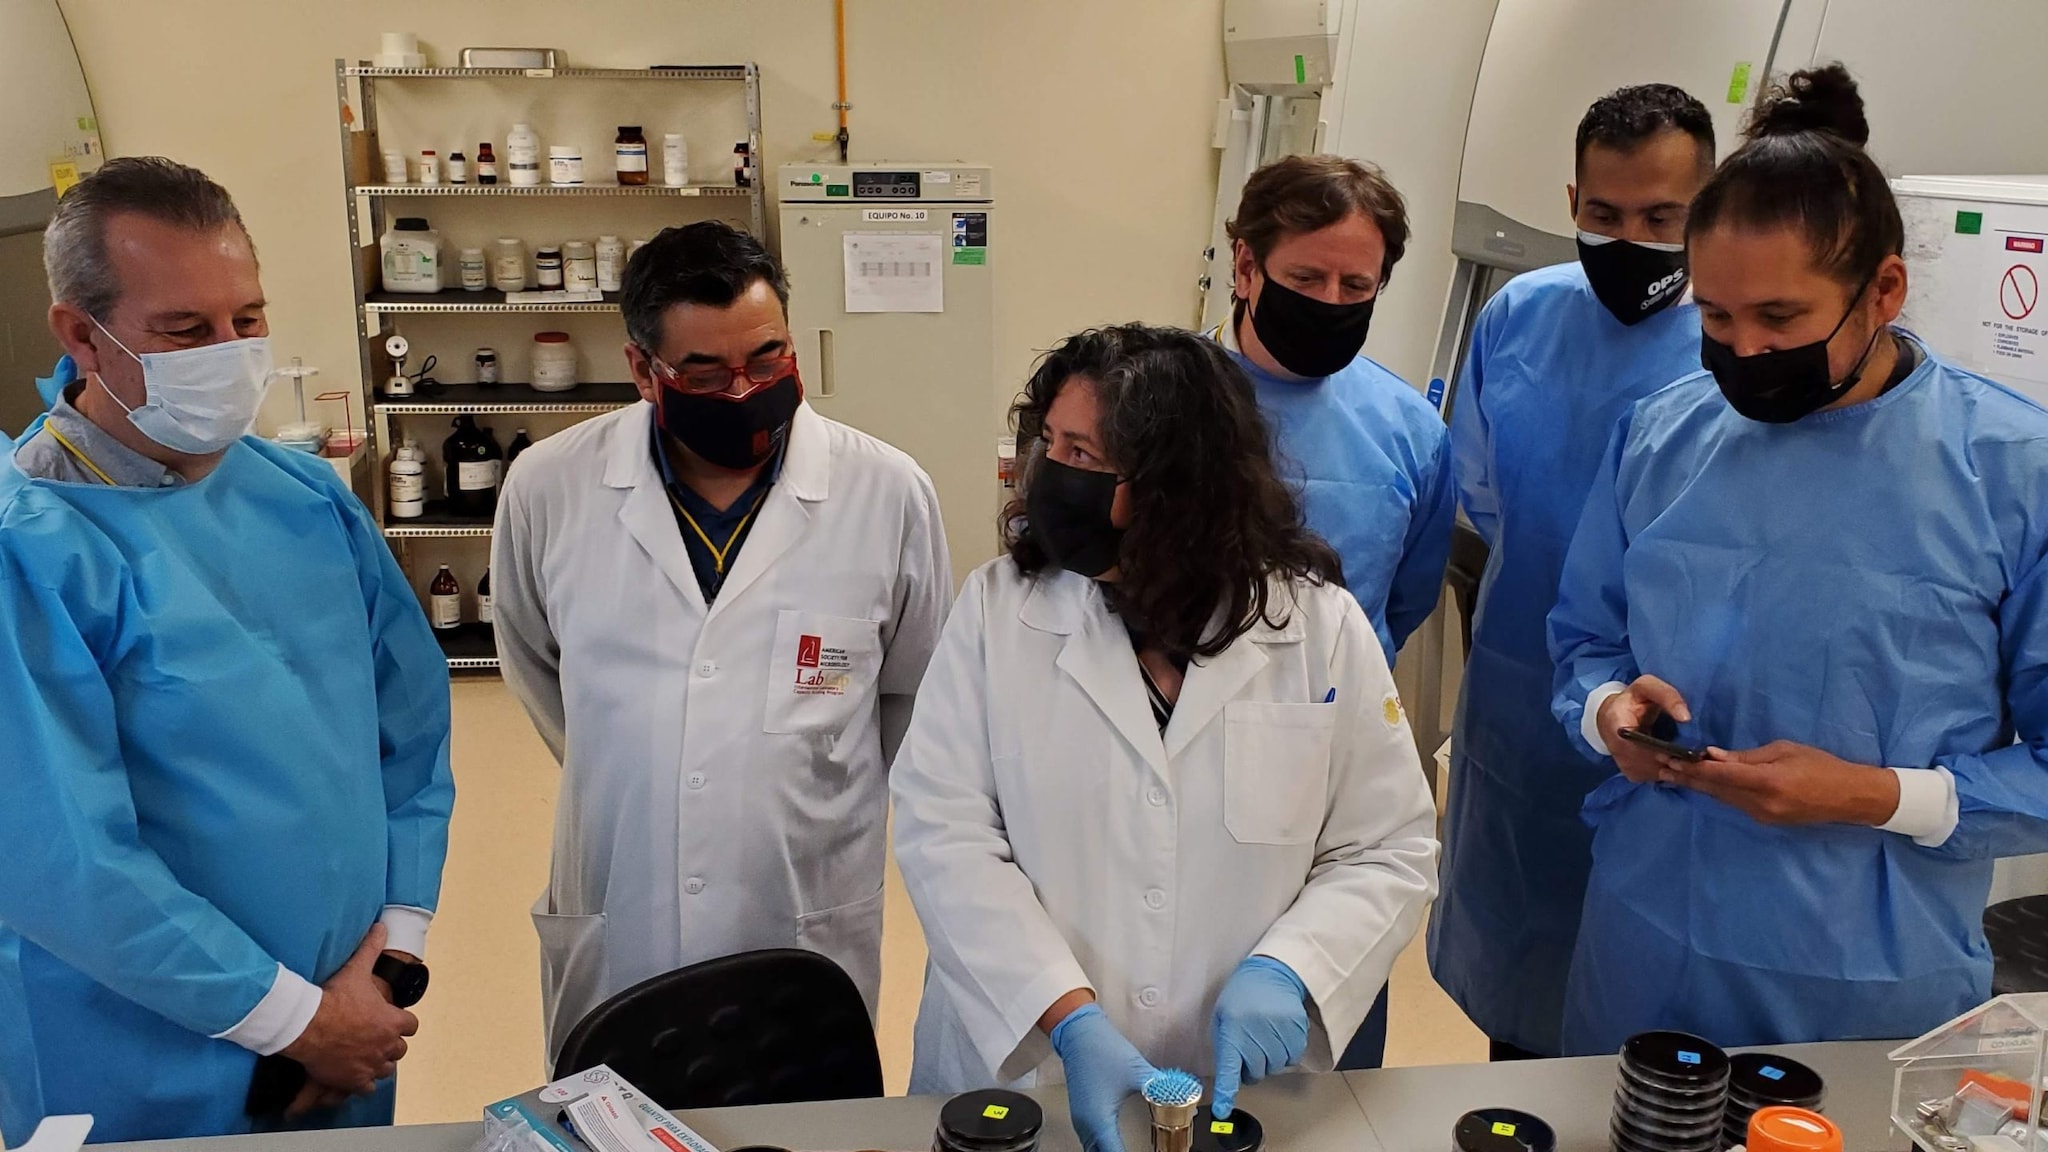 Laboratory scientists looking at lab specimen samples